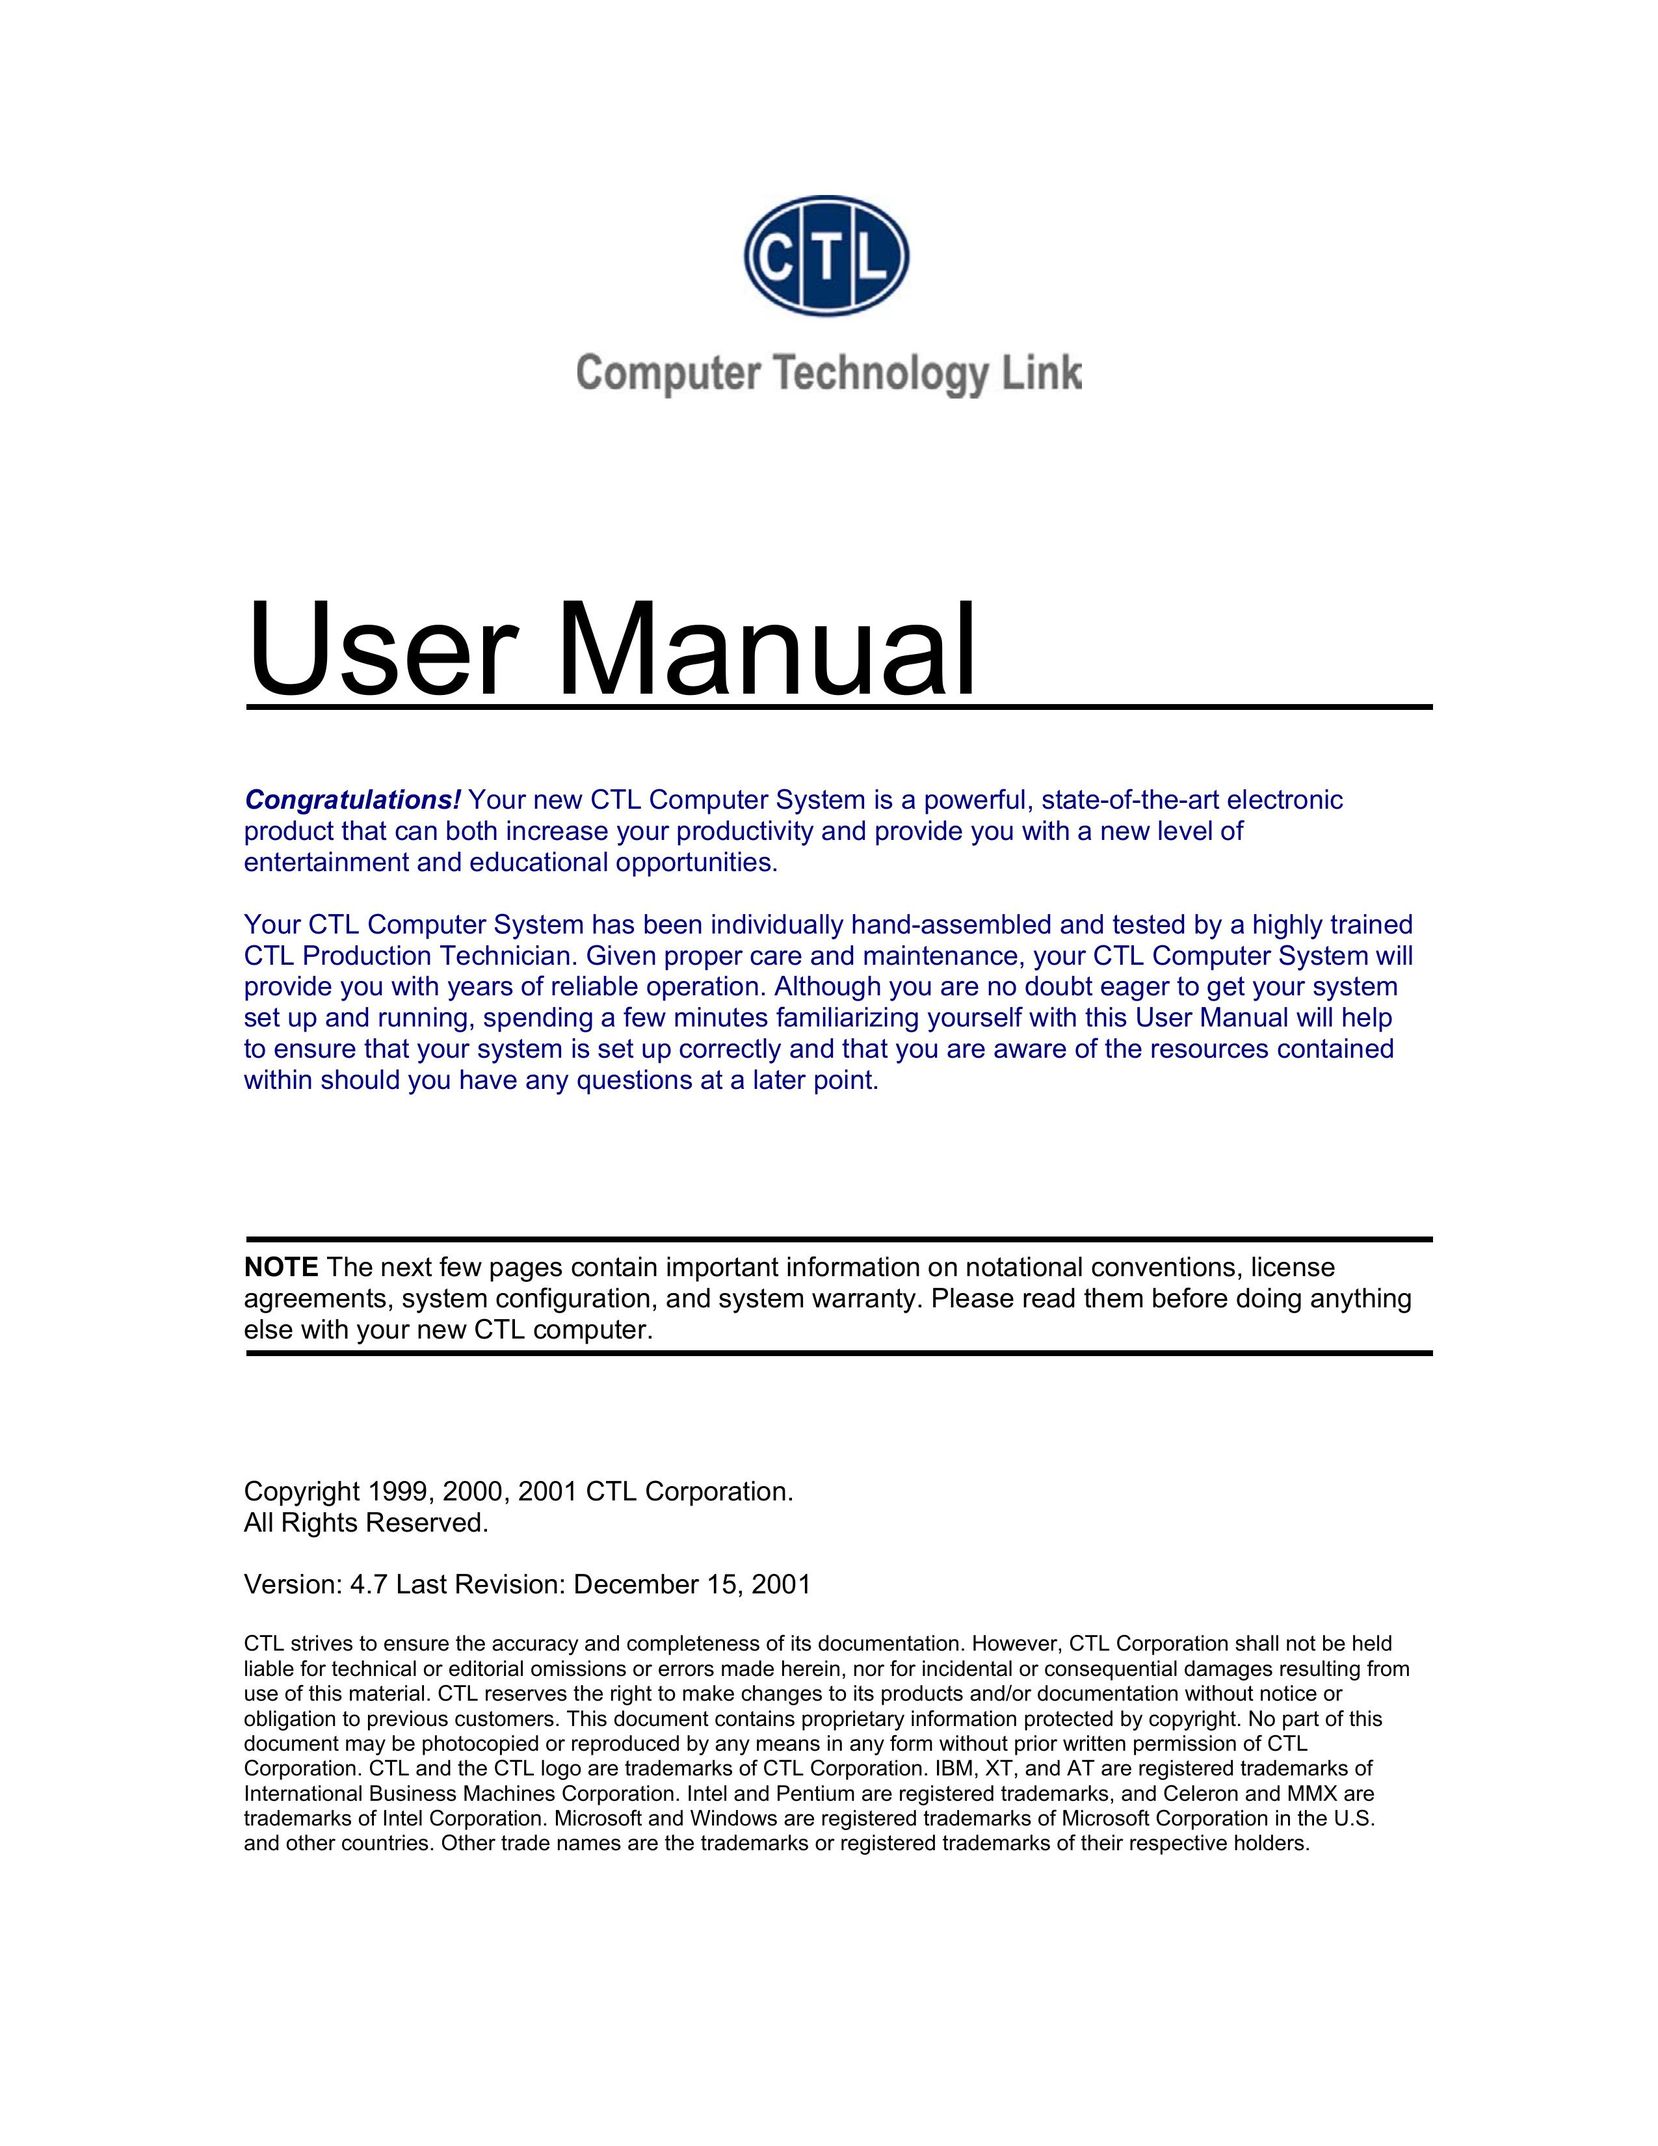 Computer Tech Link Meridian Personal Computer User Manual